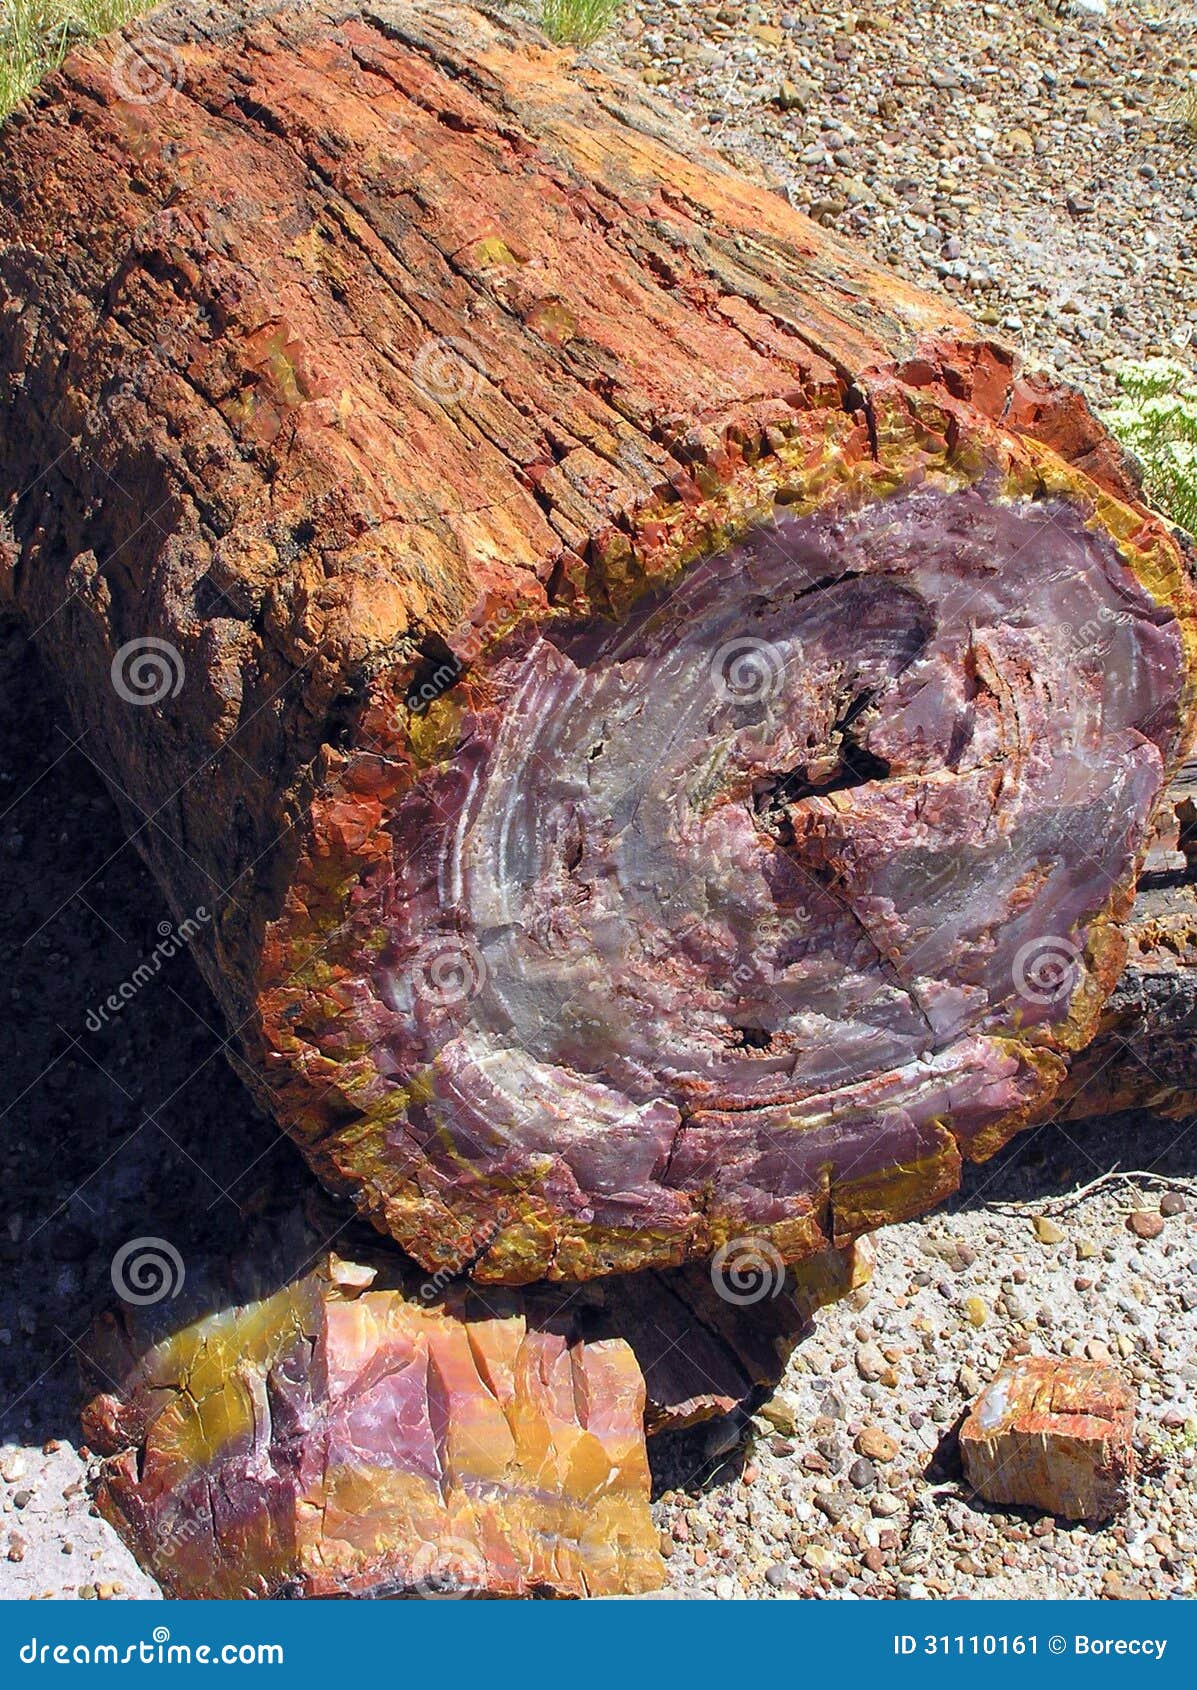 petrified wood at petrified forest national park, arizona, usa